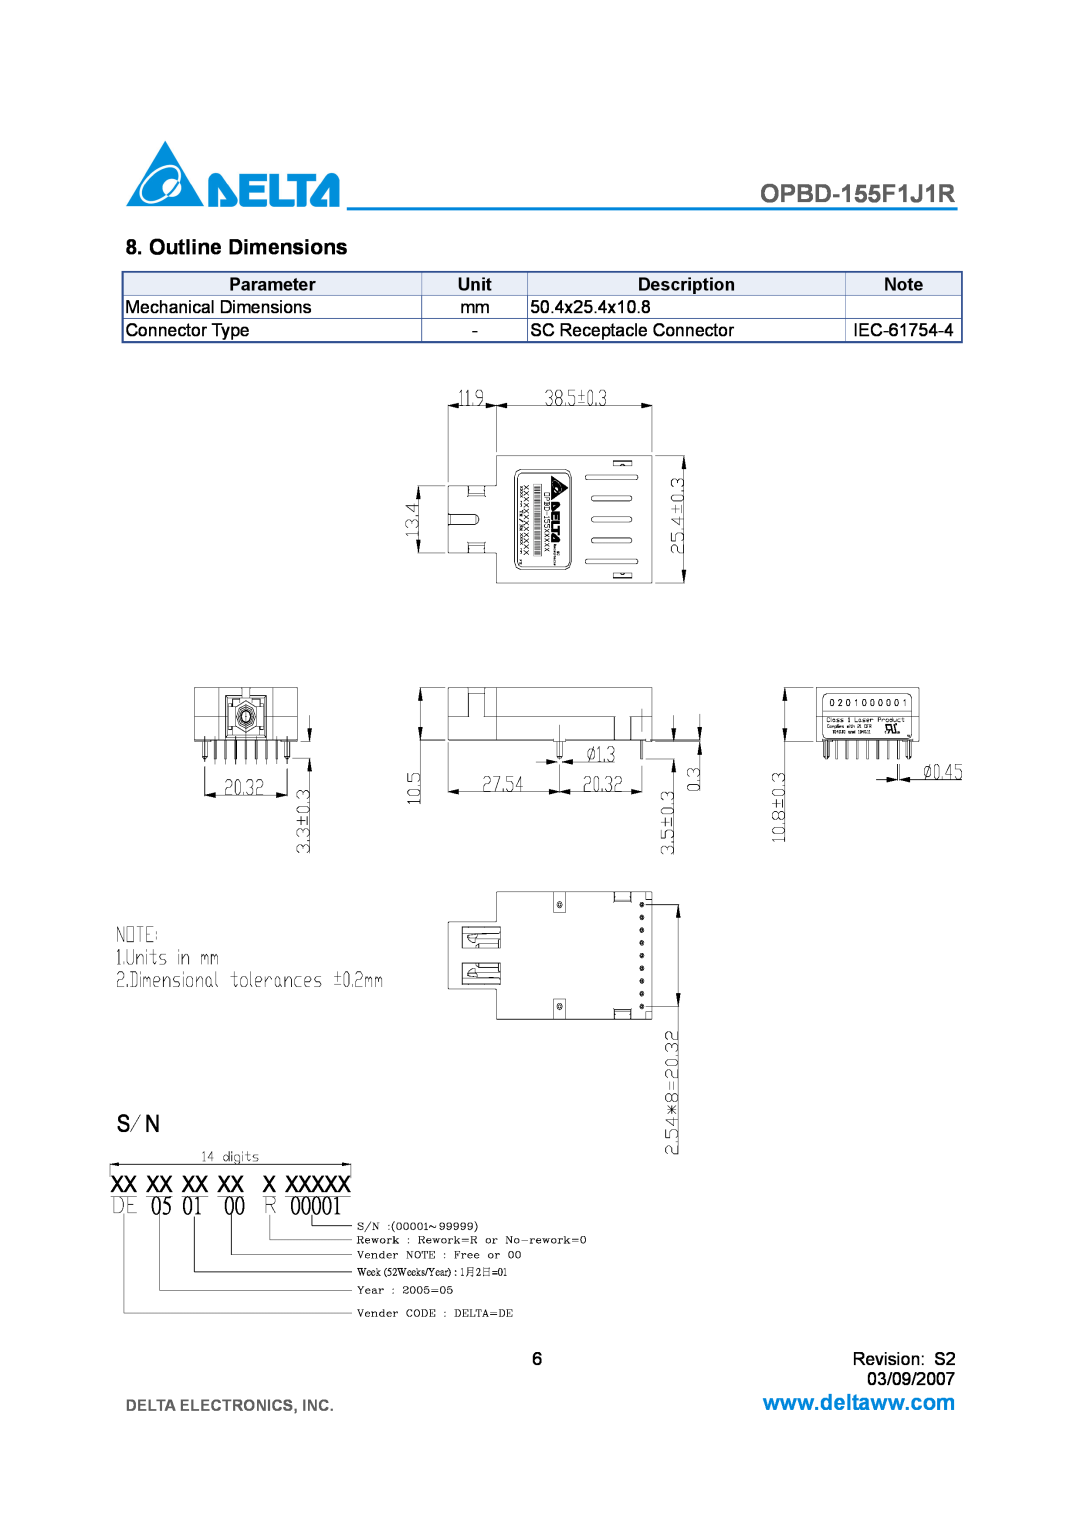 Delta Electronics OPBD-155F1J1R manual Outline Dimensions, Parameter, Unit, Description, Delta Electronics, Inc 